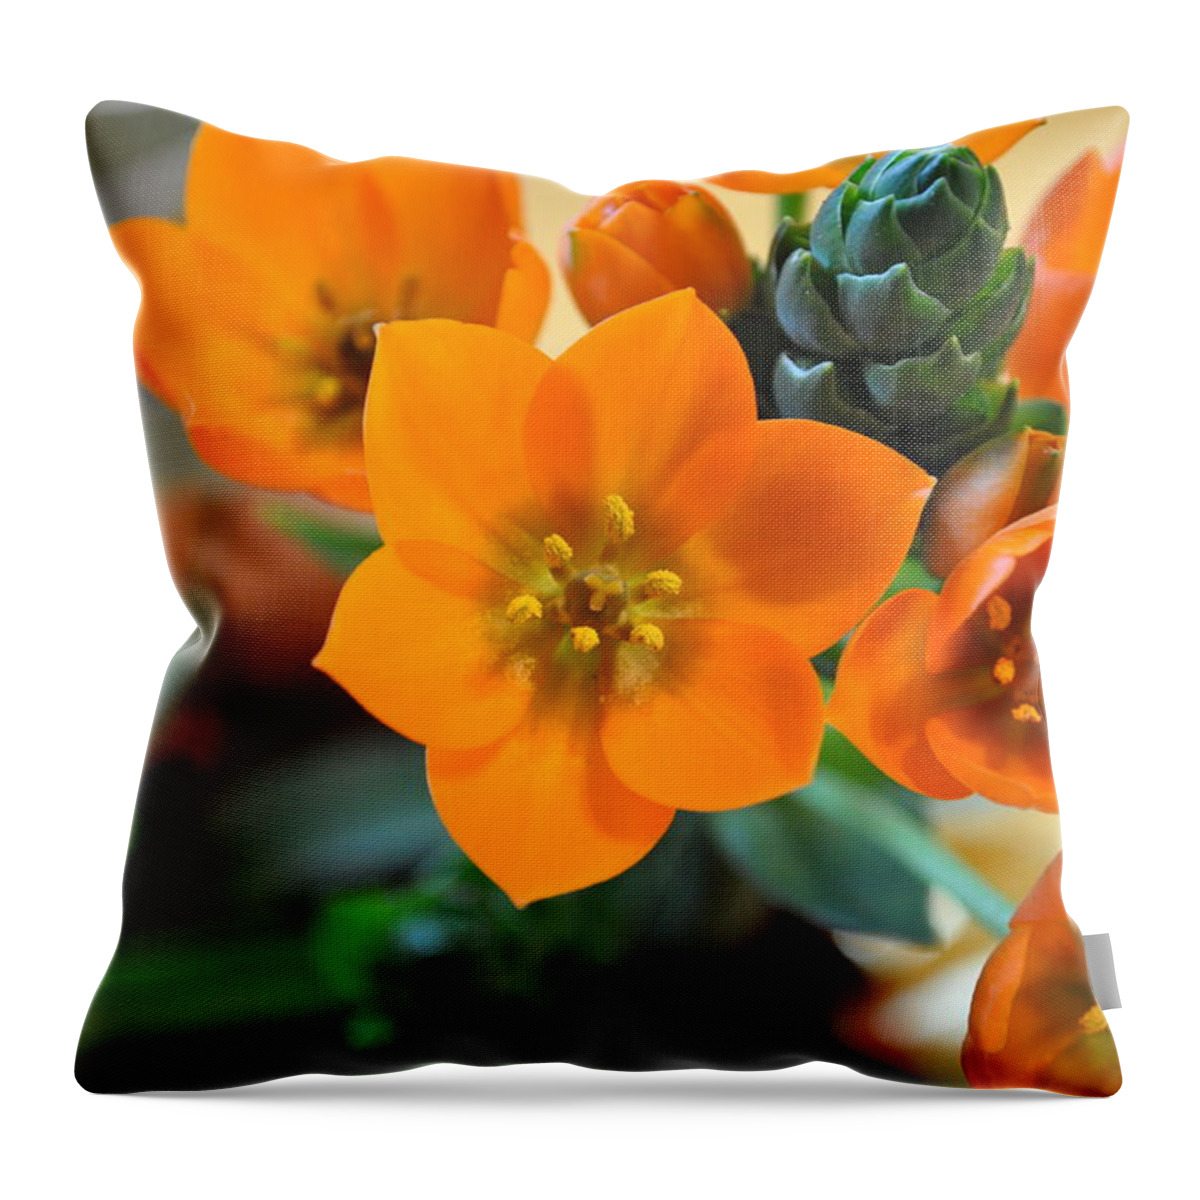 Orange Throw Pillow featuring the photograph Orange Star by Bridgette Gomes